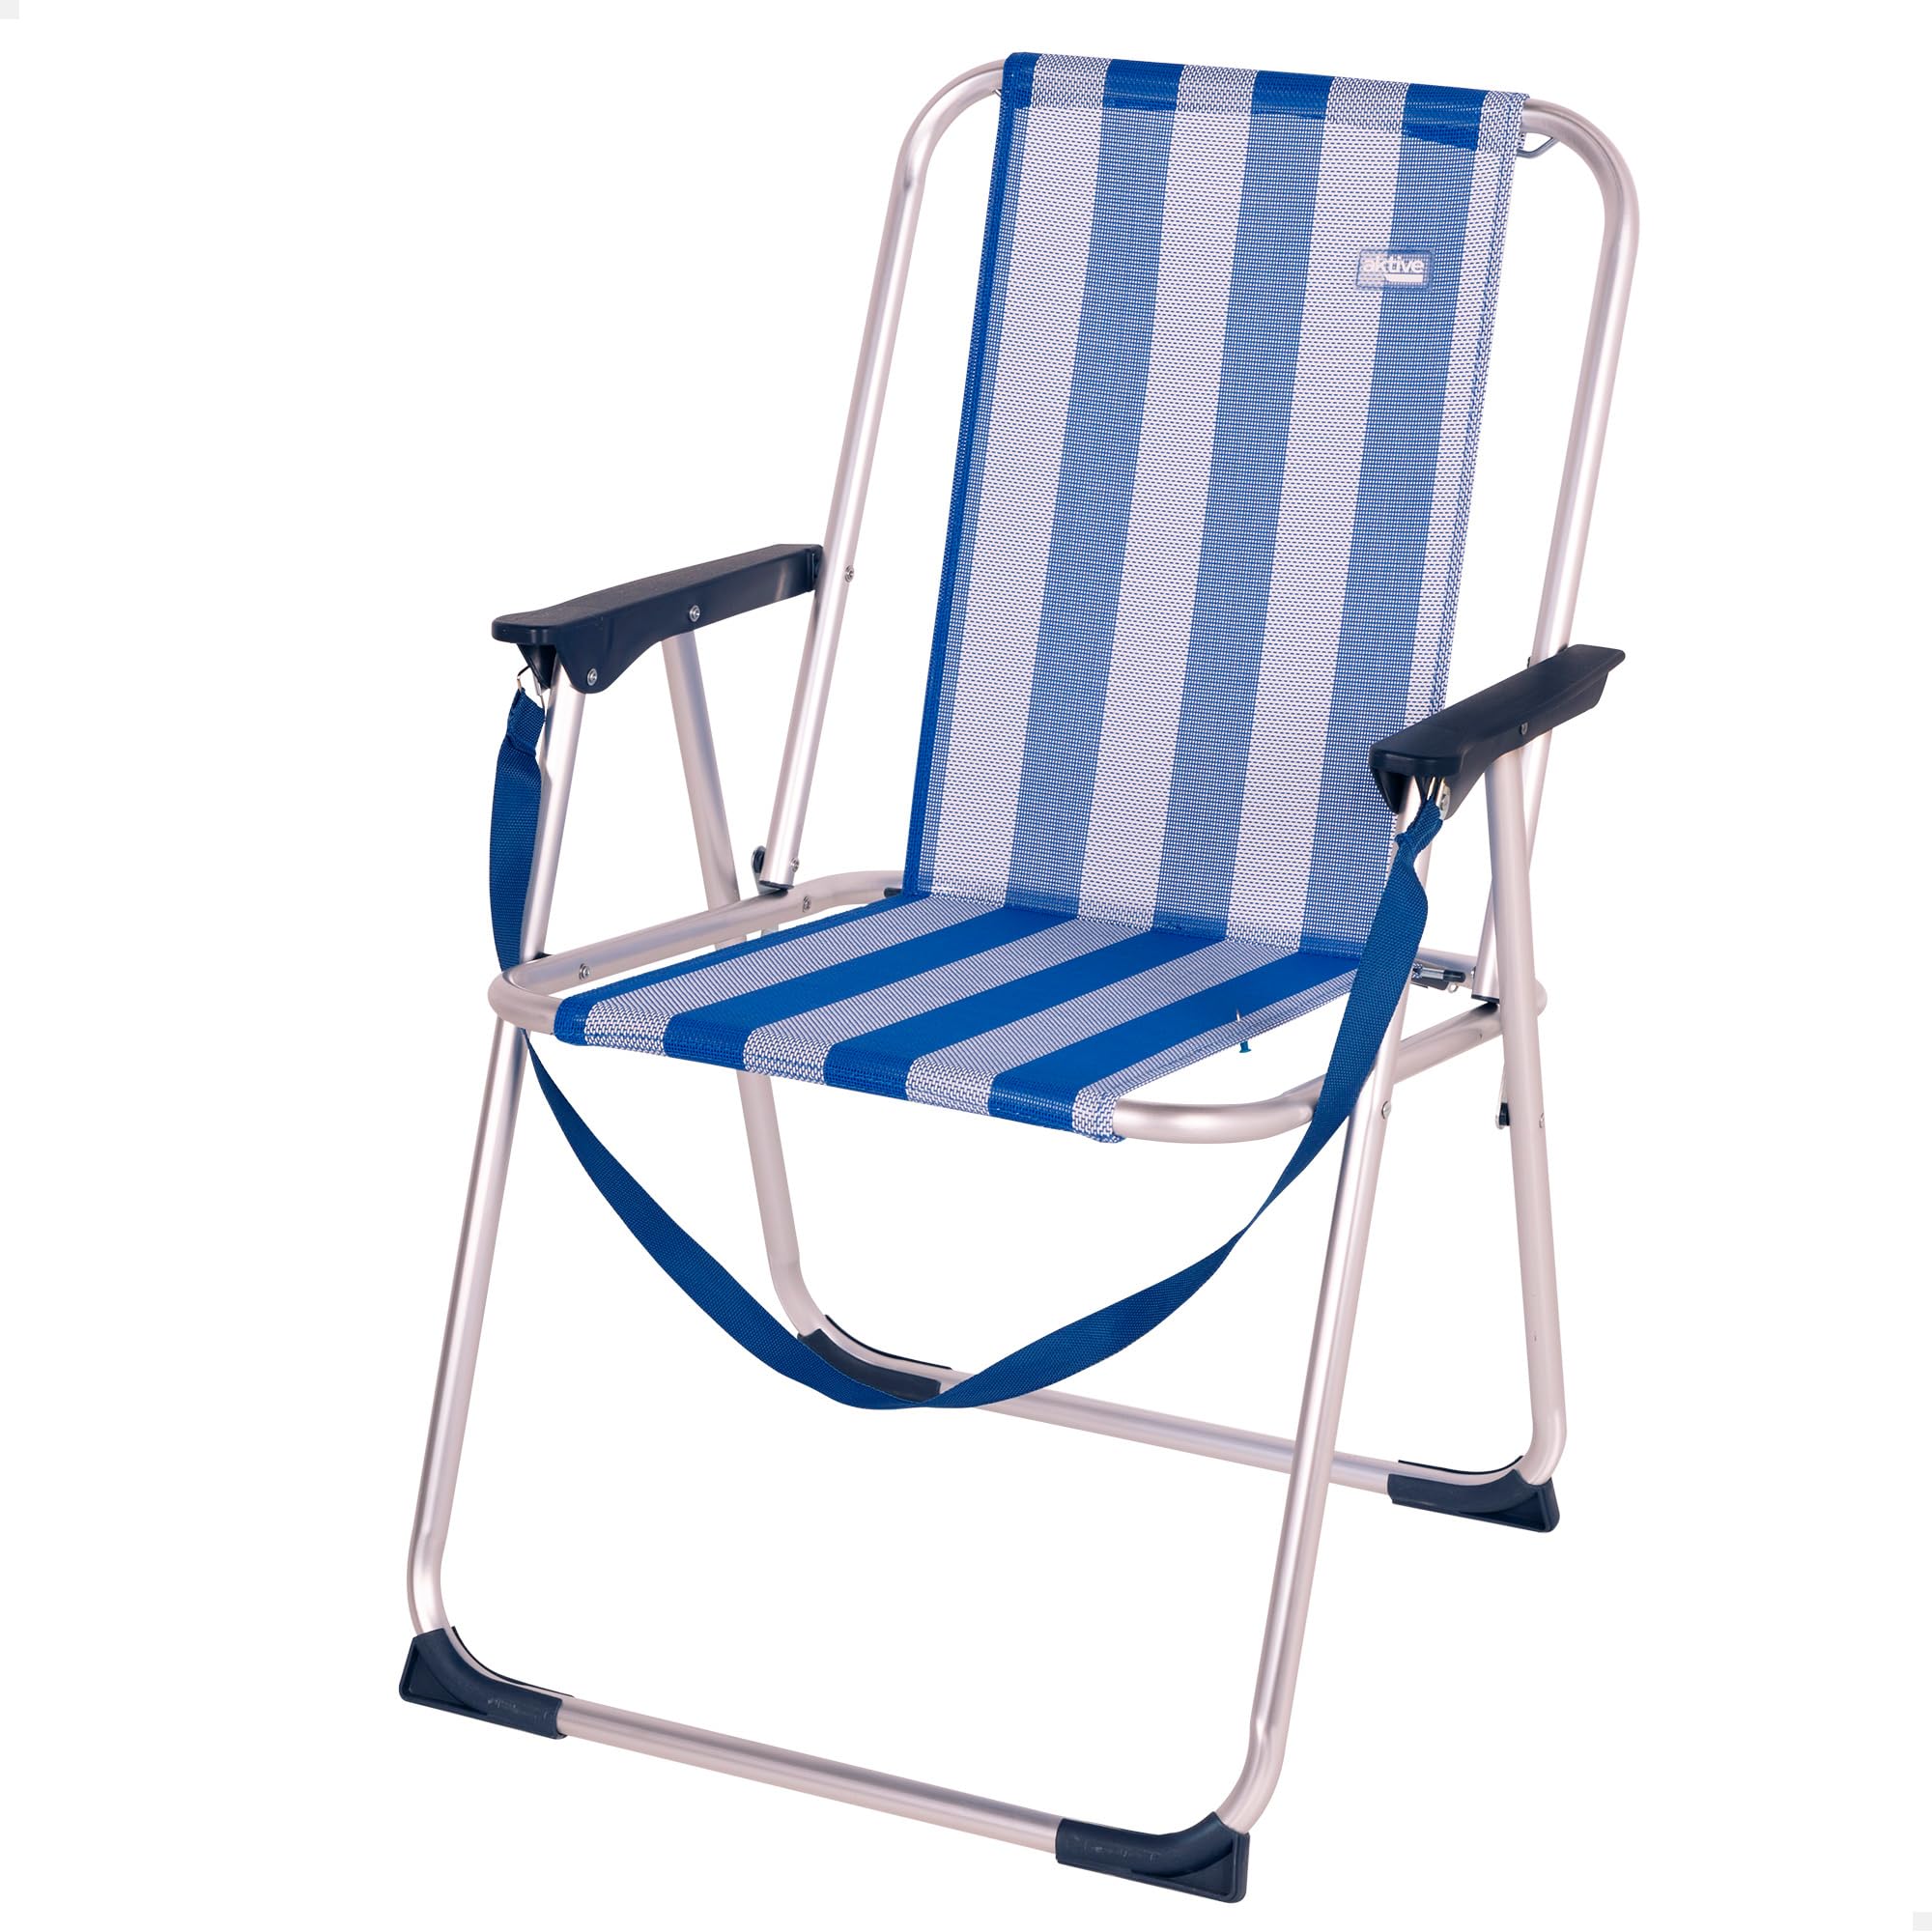 Aktive Feststehender Stuhl aus Aluminium, Beach Seefahrt